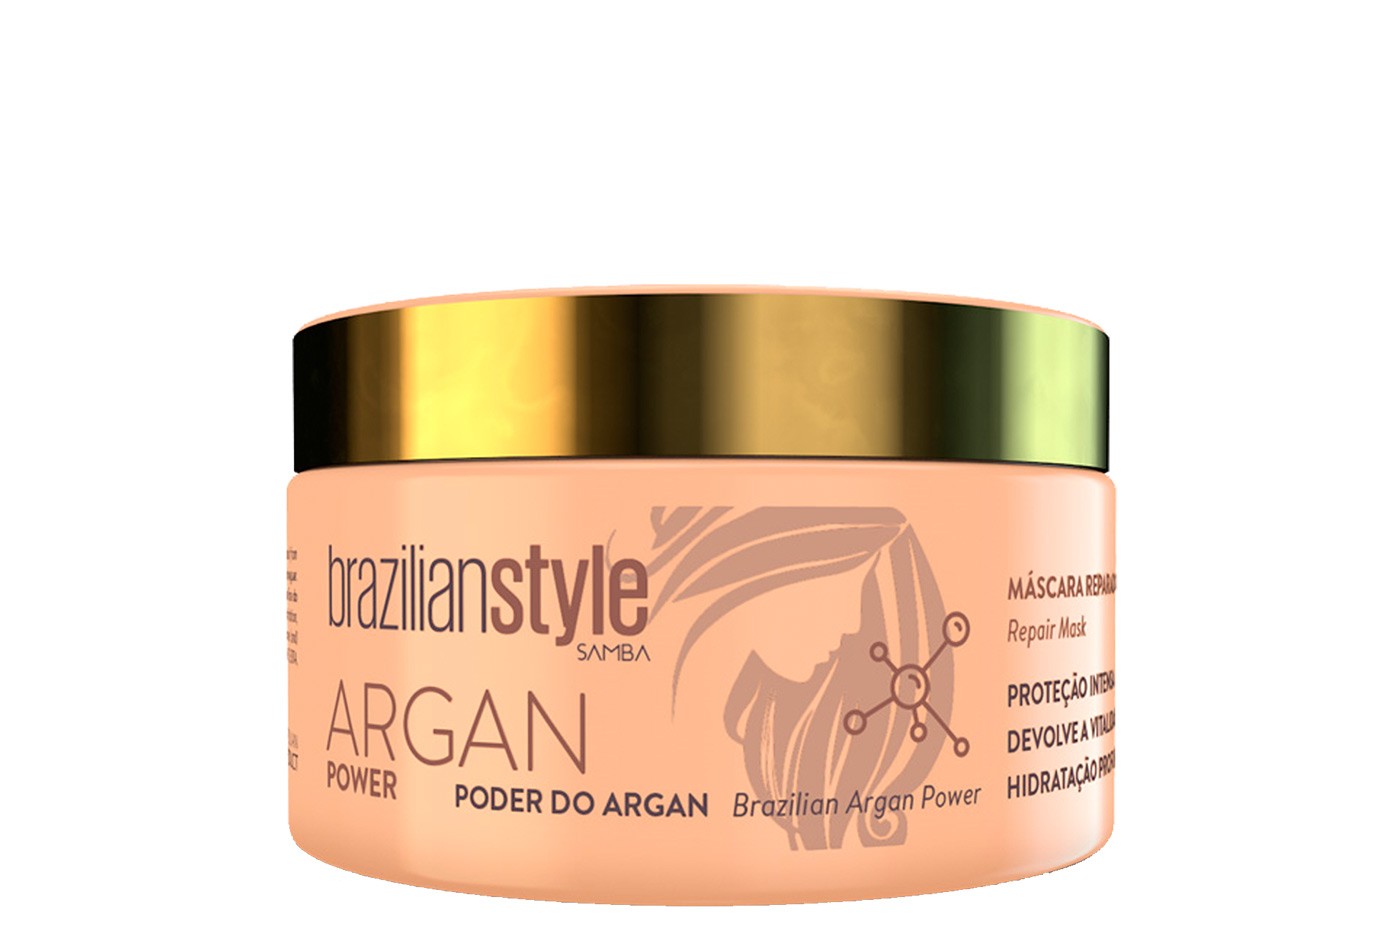 Get radiant hair with Samba’s Argan Mask Deep Hydration